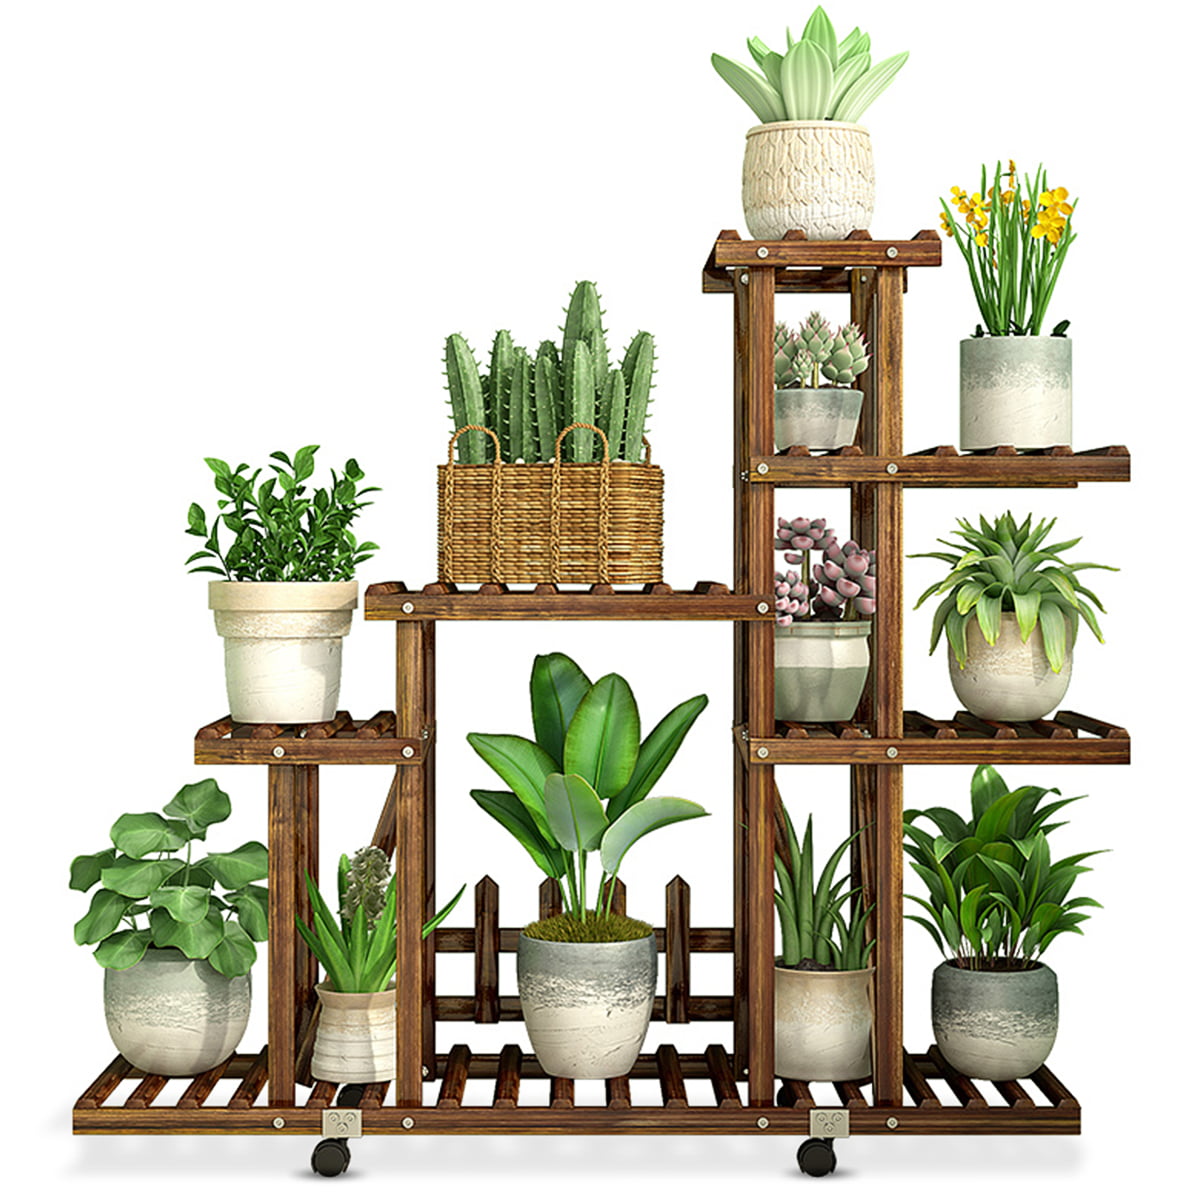 Details about   5-Shelf Garden Wooden Plant Stand Pot Holder Display Shelf Home Decor 